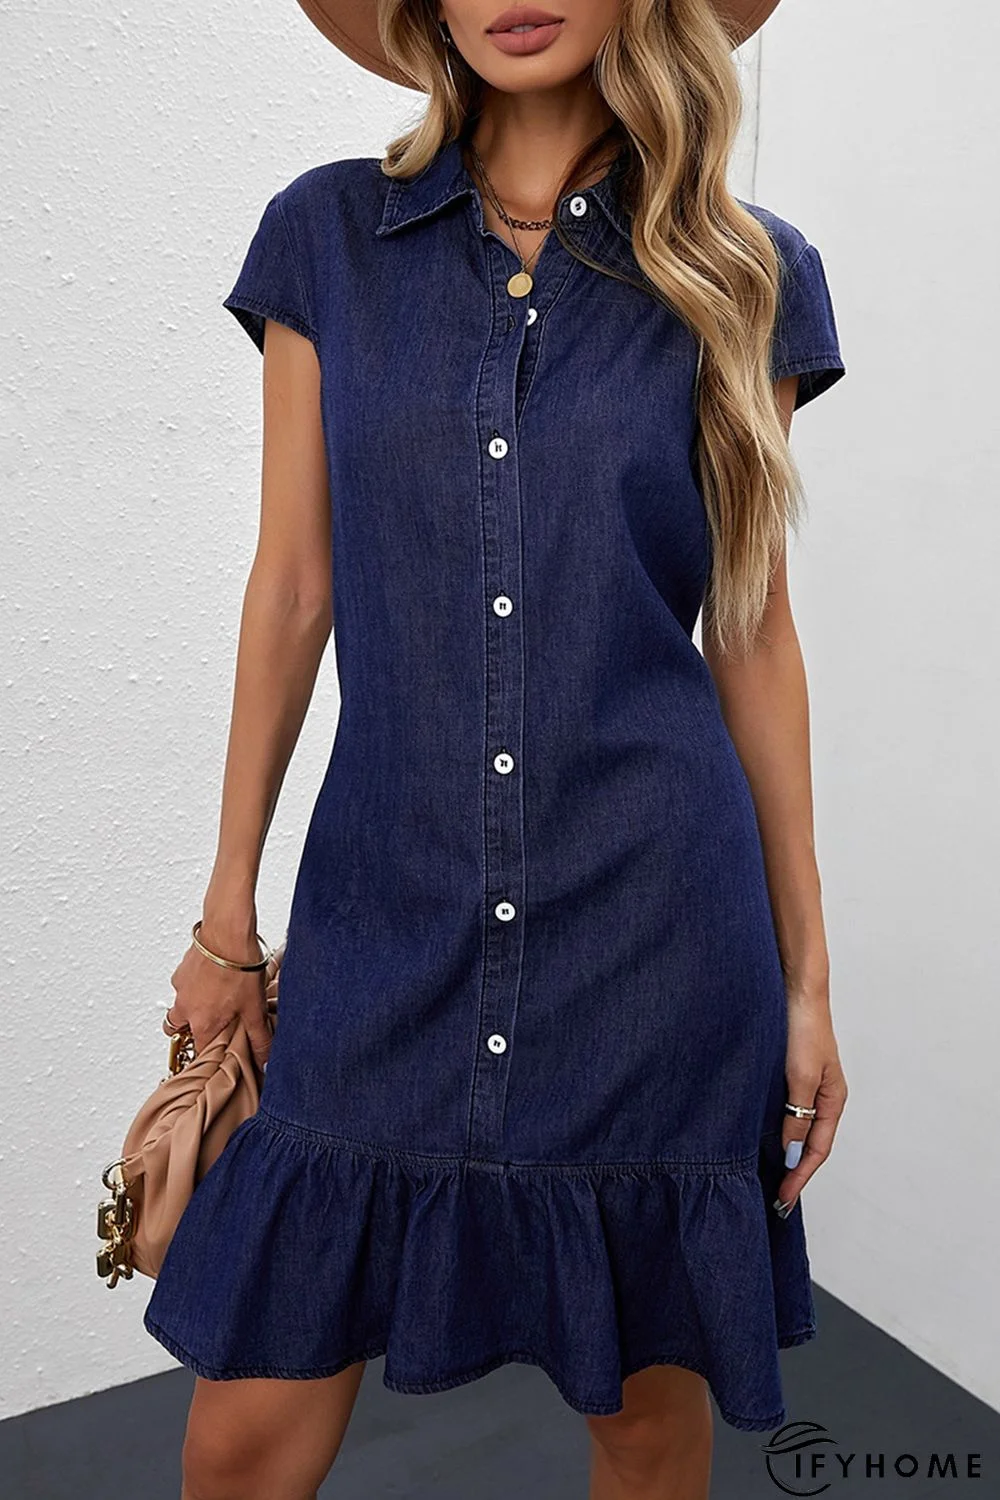 Blue Cap Sleeve Button Front Denim Mini Dress | IFYHOME